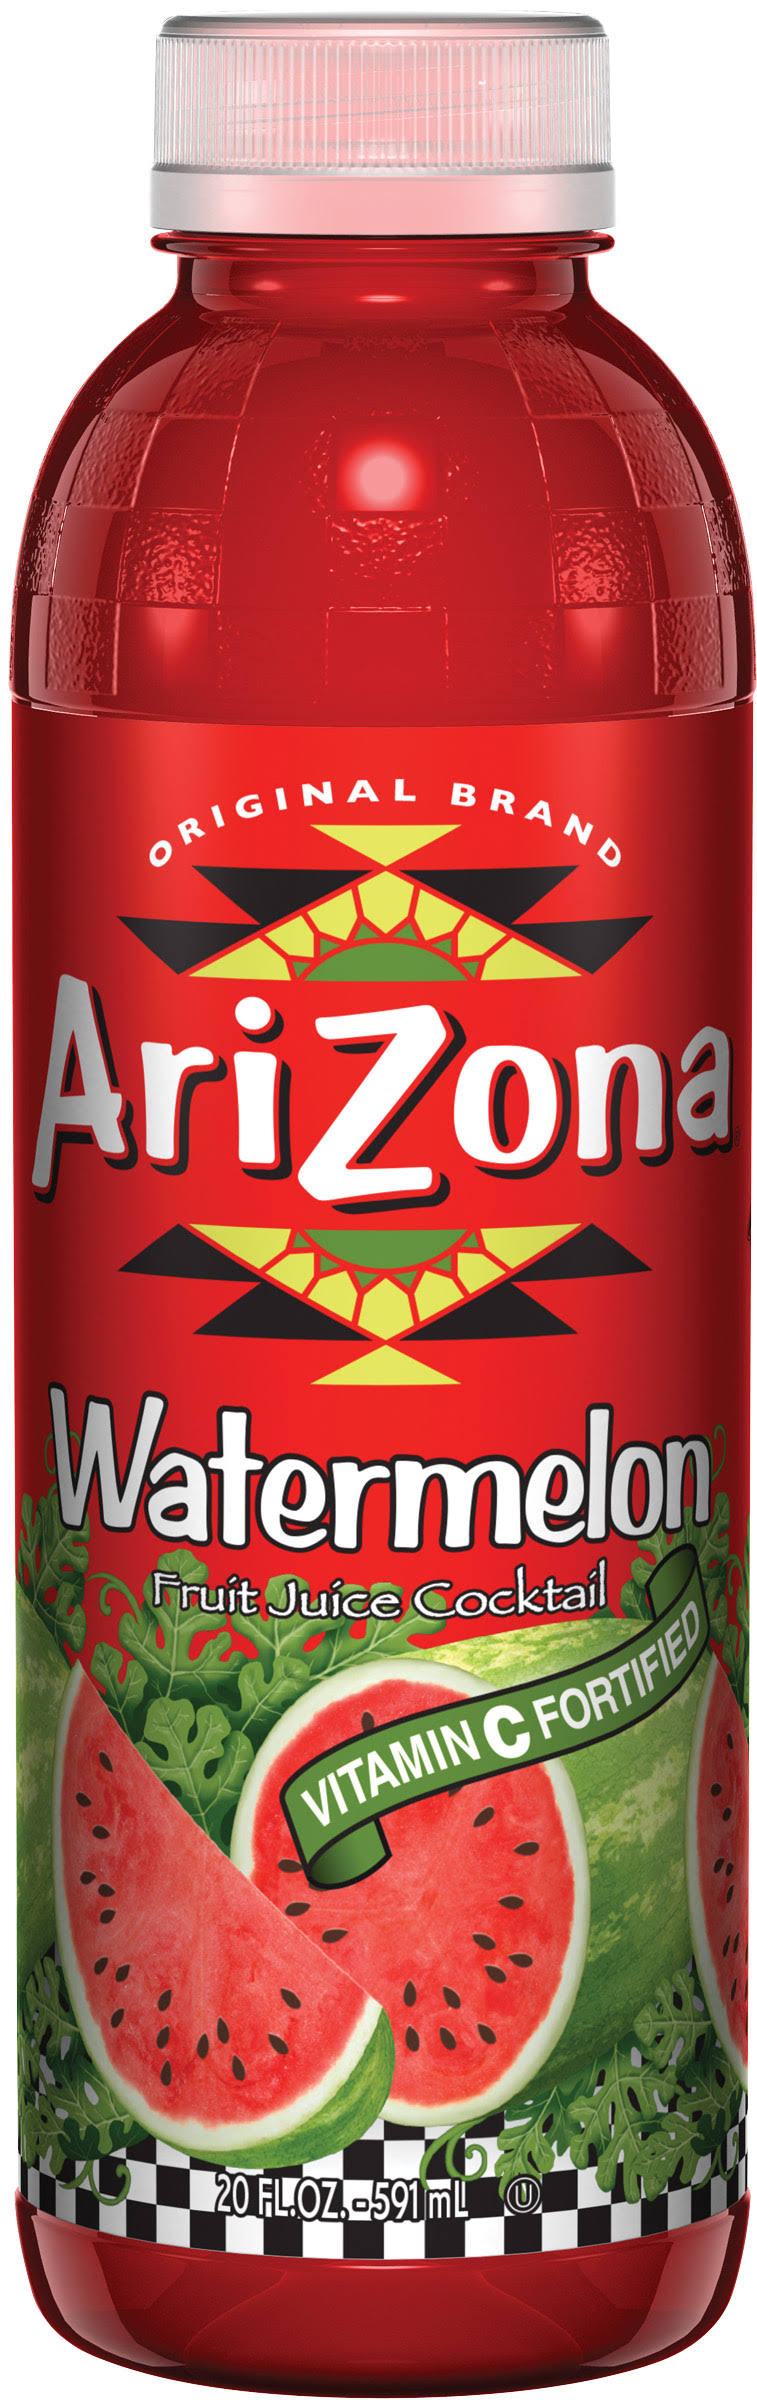 Arizona Fruit Juice Cocktail, Watermelon - 20 fl oz